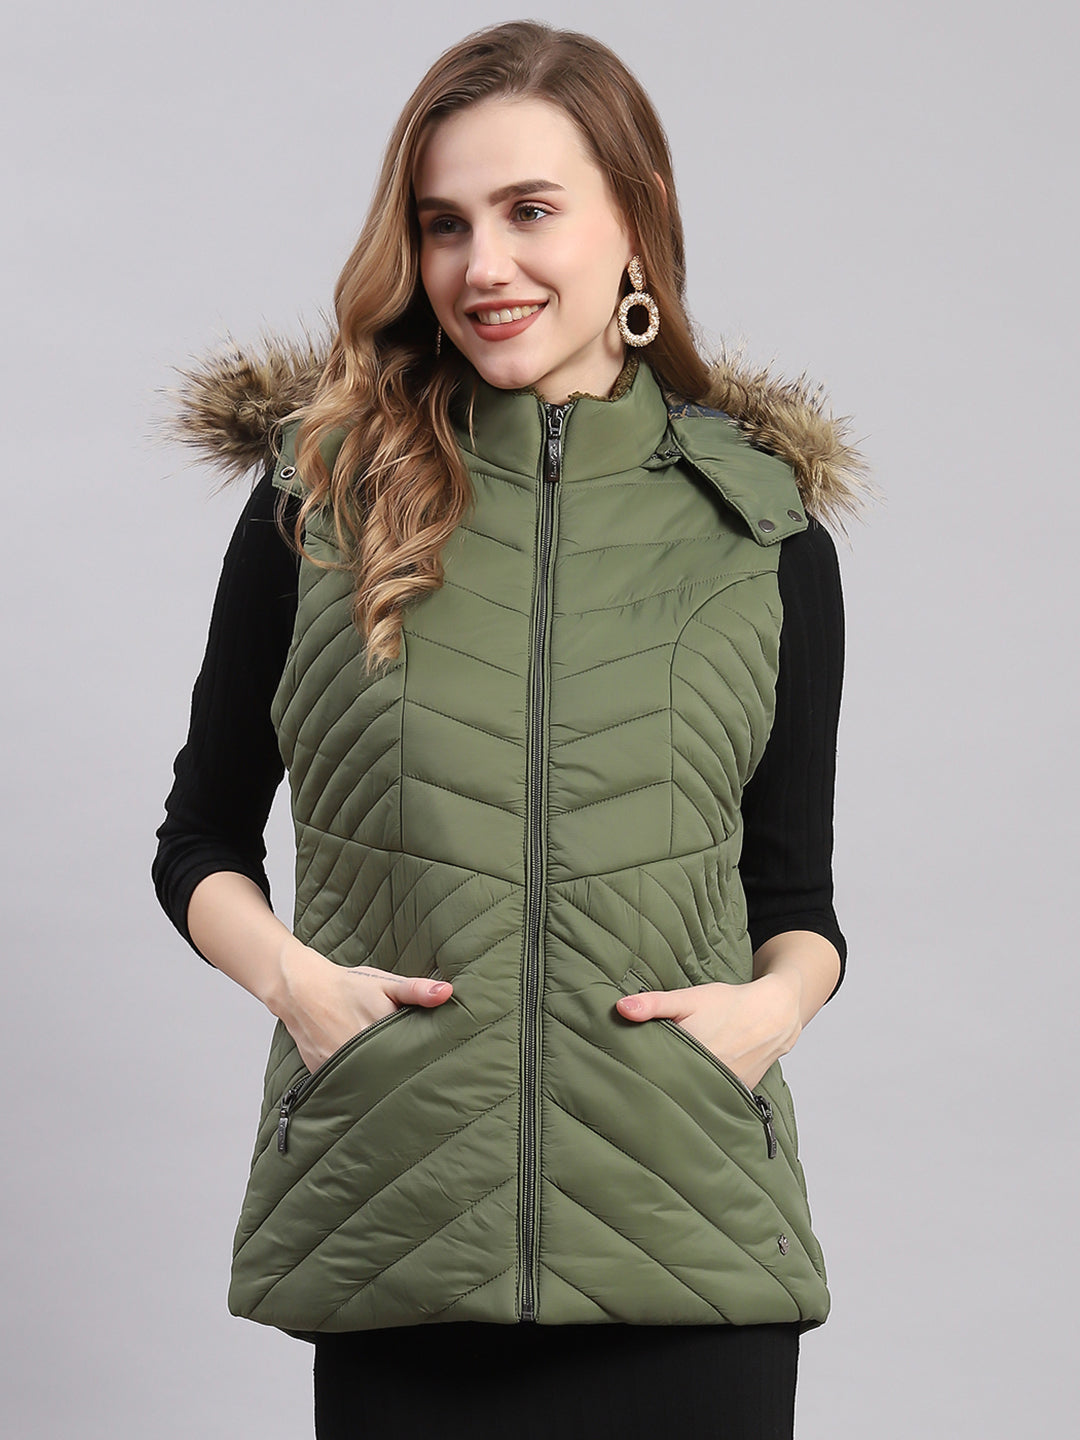 Ladies jacket design new | Ladies Jacket design woolen | Jacket ke mudde  kaise ghataye - YouTube